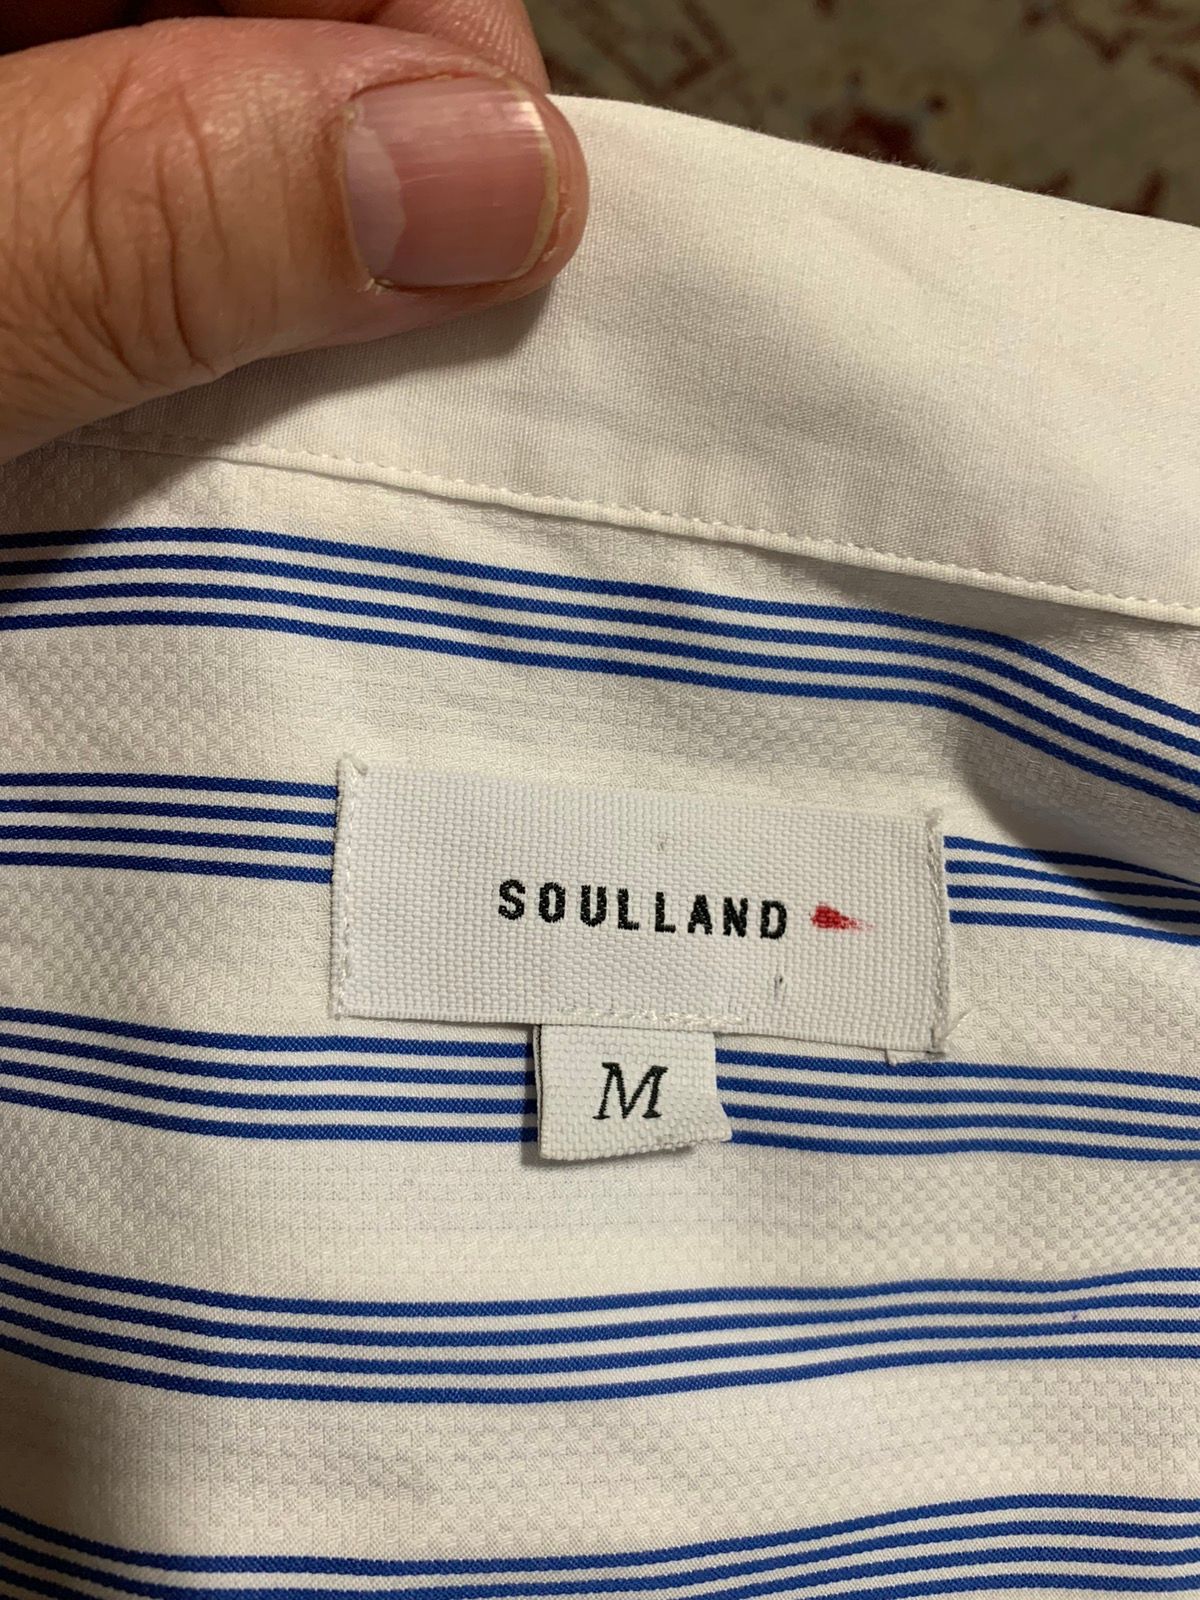 Soulland Striped Contrast Collar & Cuff Button Front shirt Size US M / EU 48-50 / 2 - 4 Thumbnail